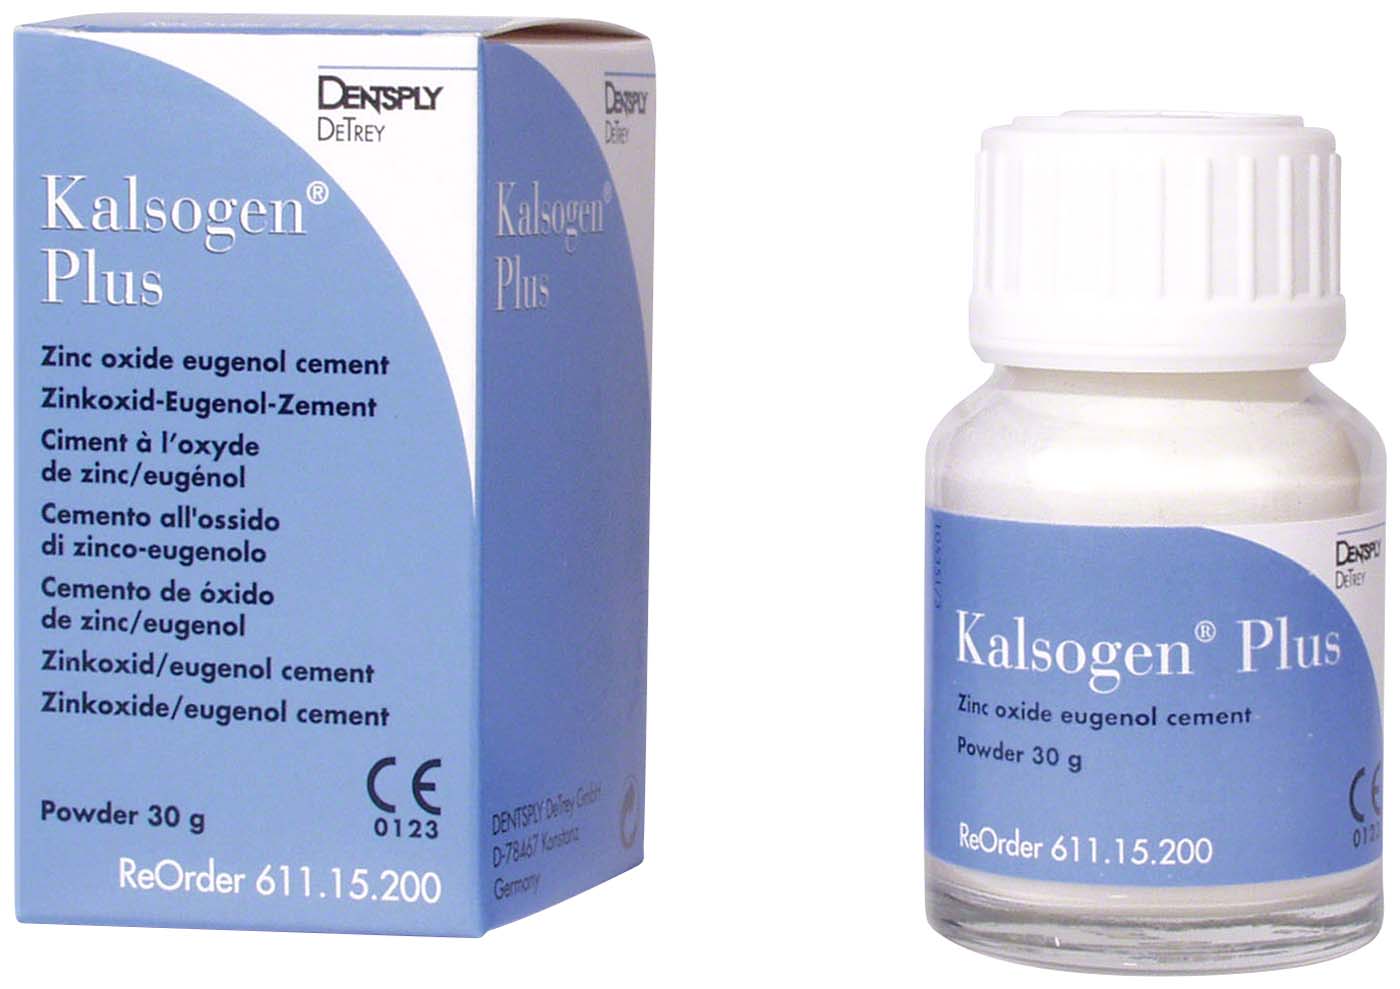 Kalsogen® Plus Dentsply Sirona